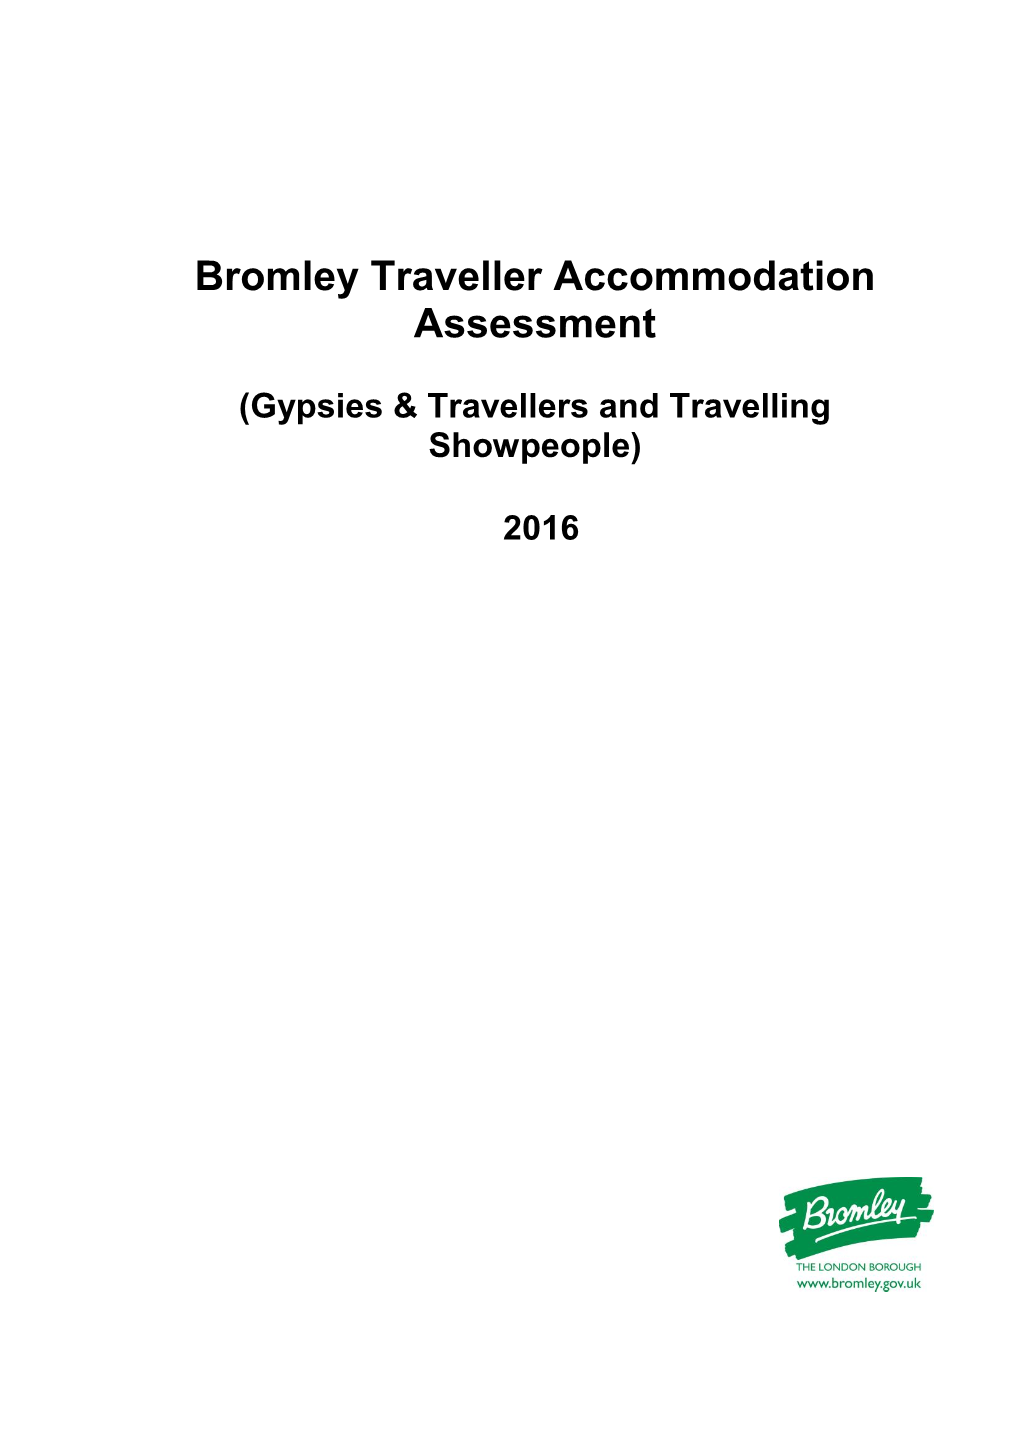 Gypsy & Traveller Evidence Paper